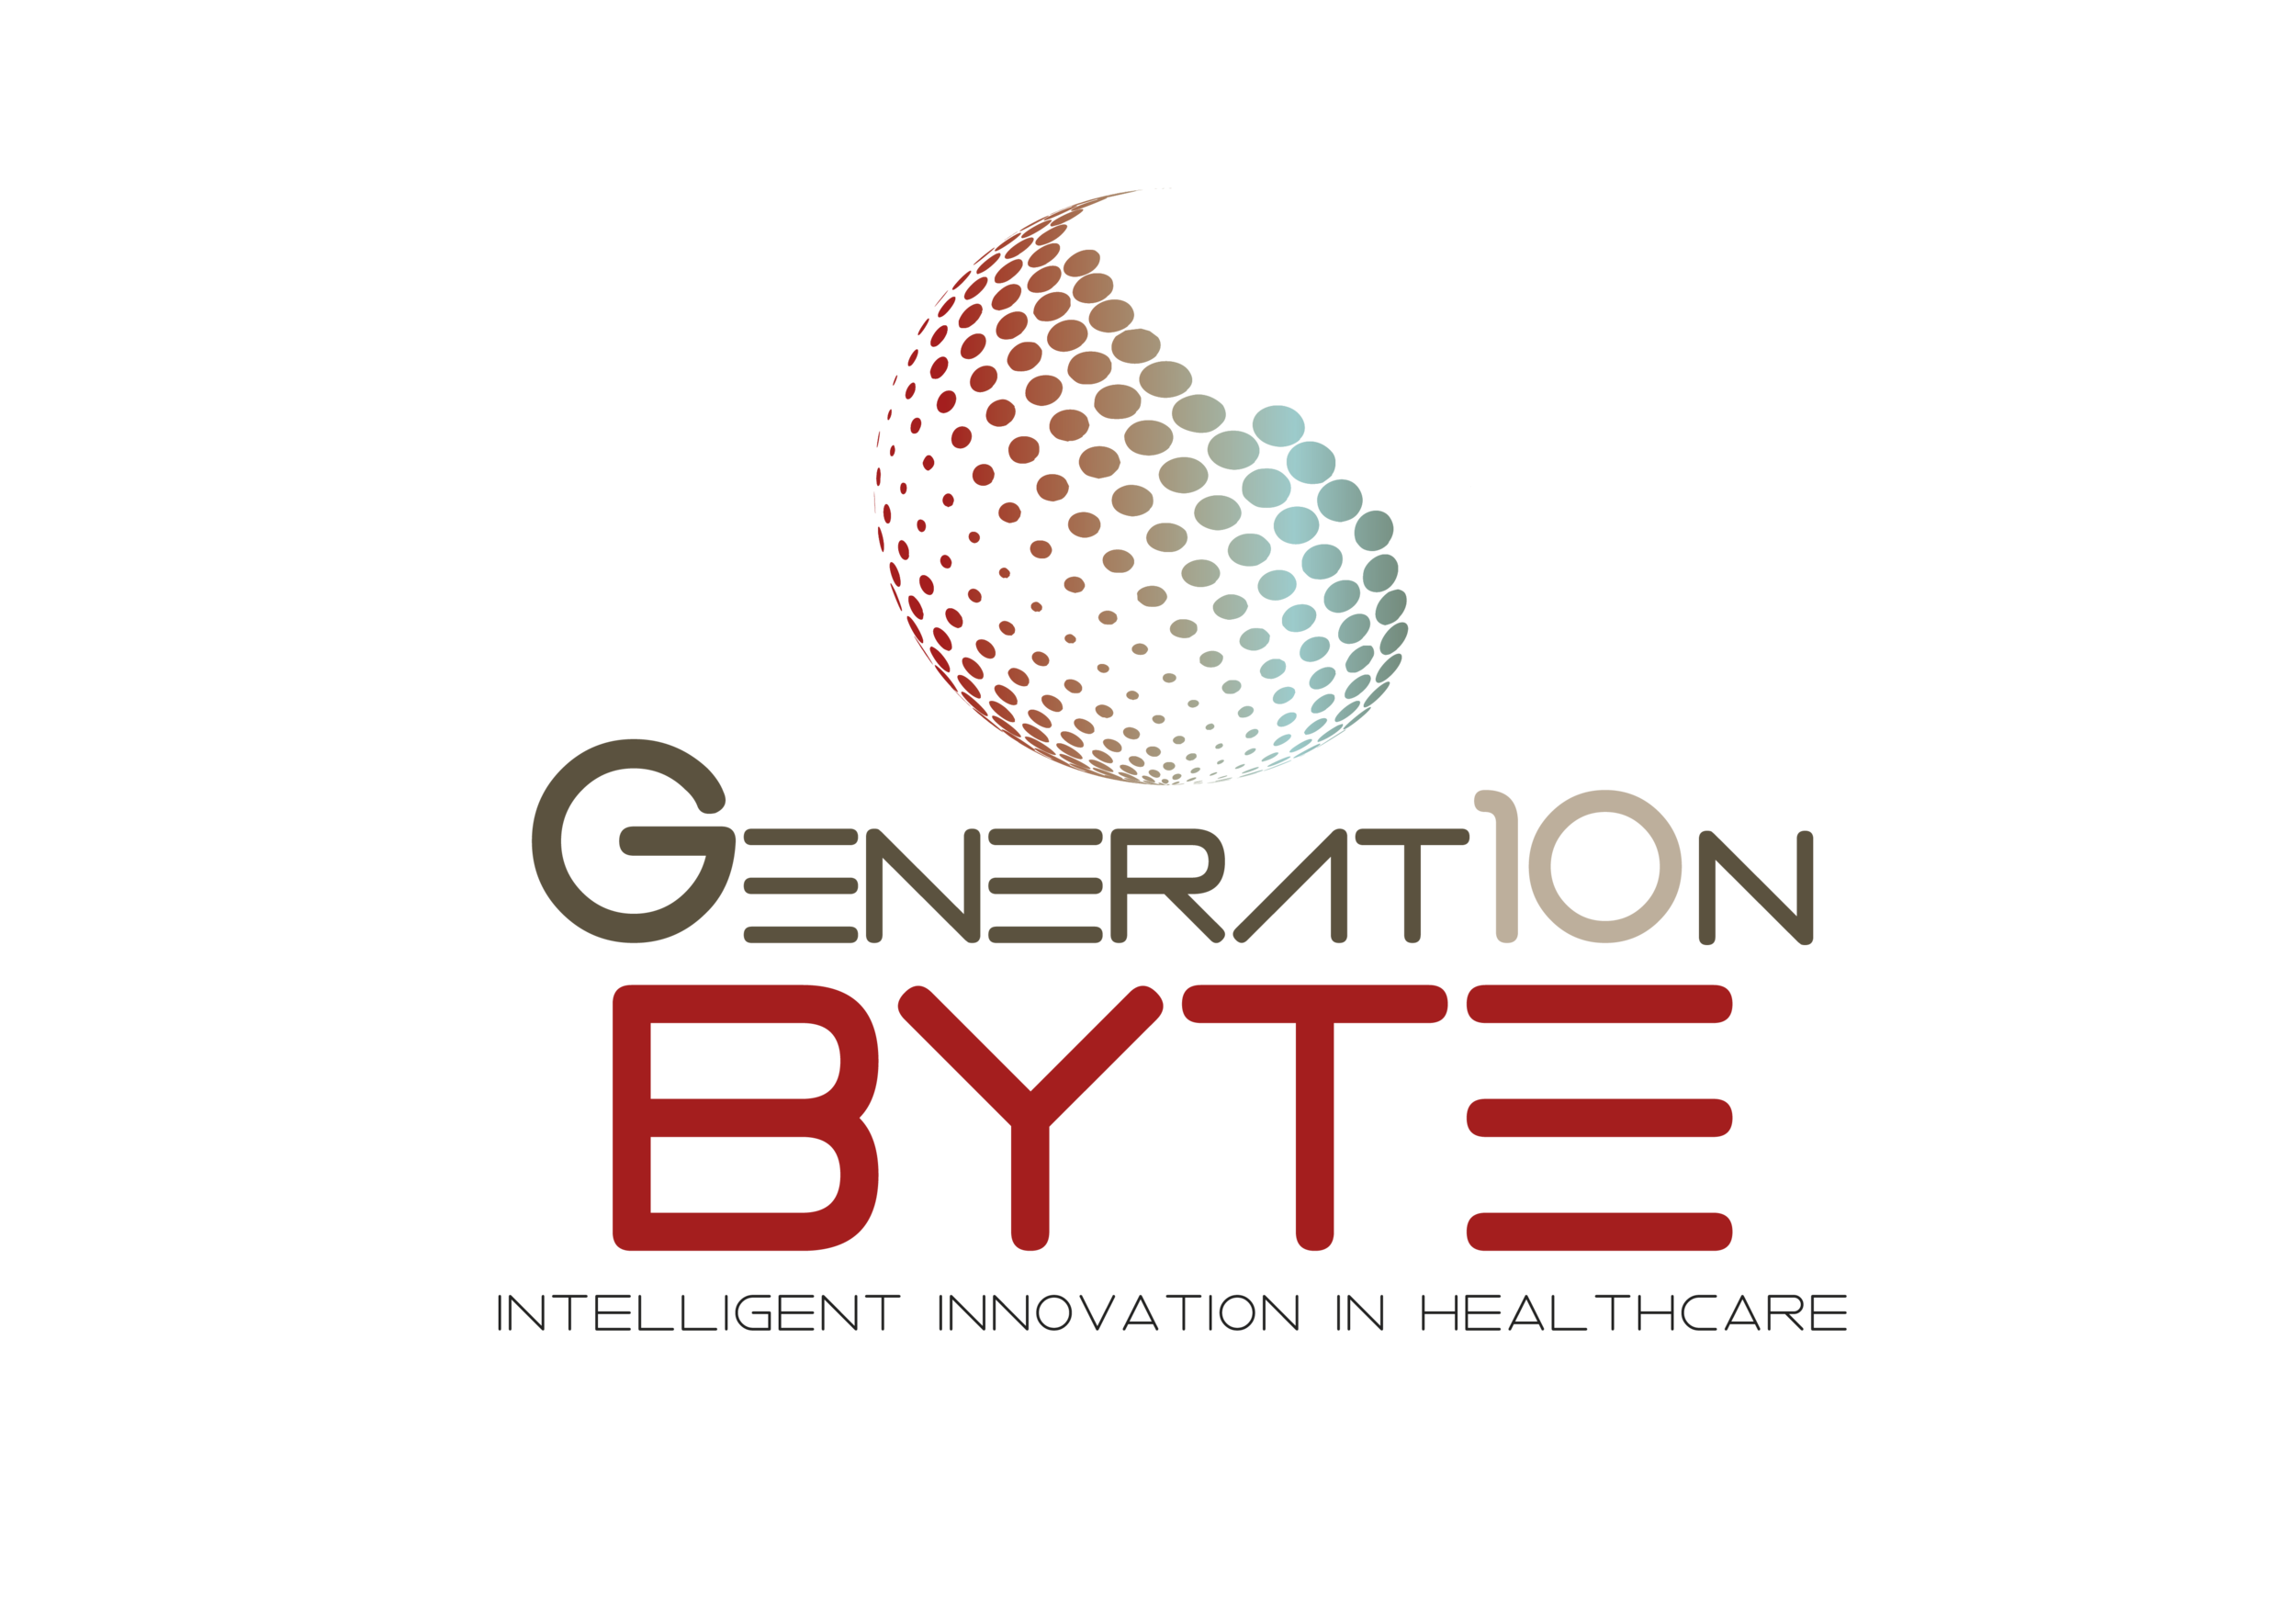 Generation Byte